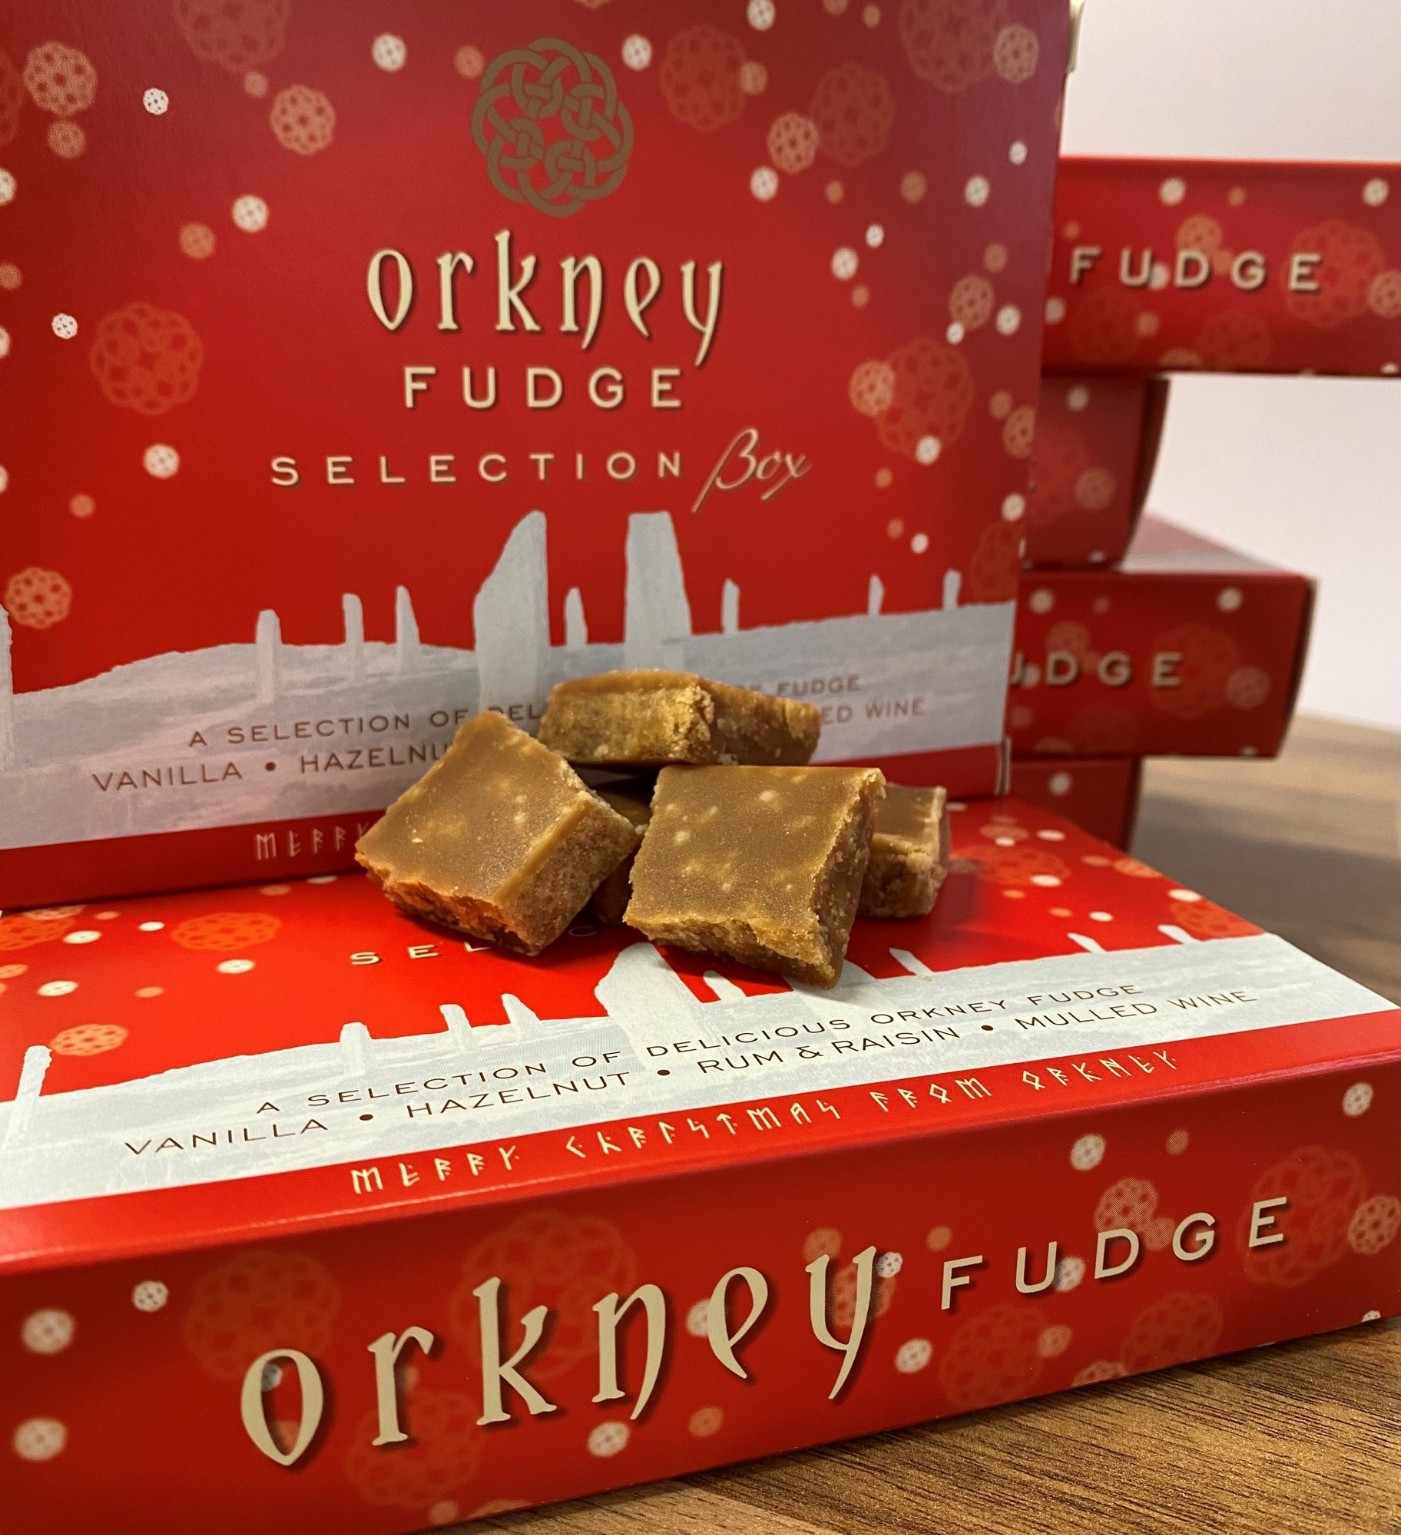 Orkney fudge from Argo's Bakery